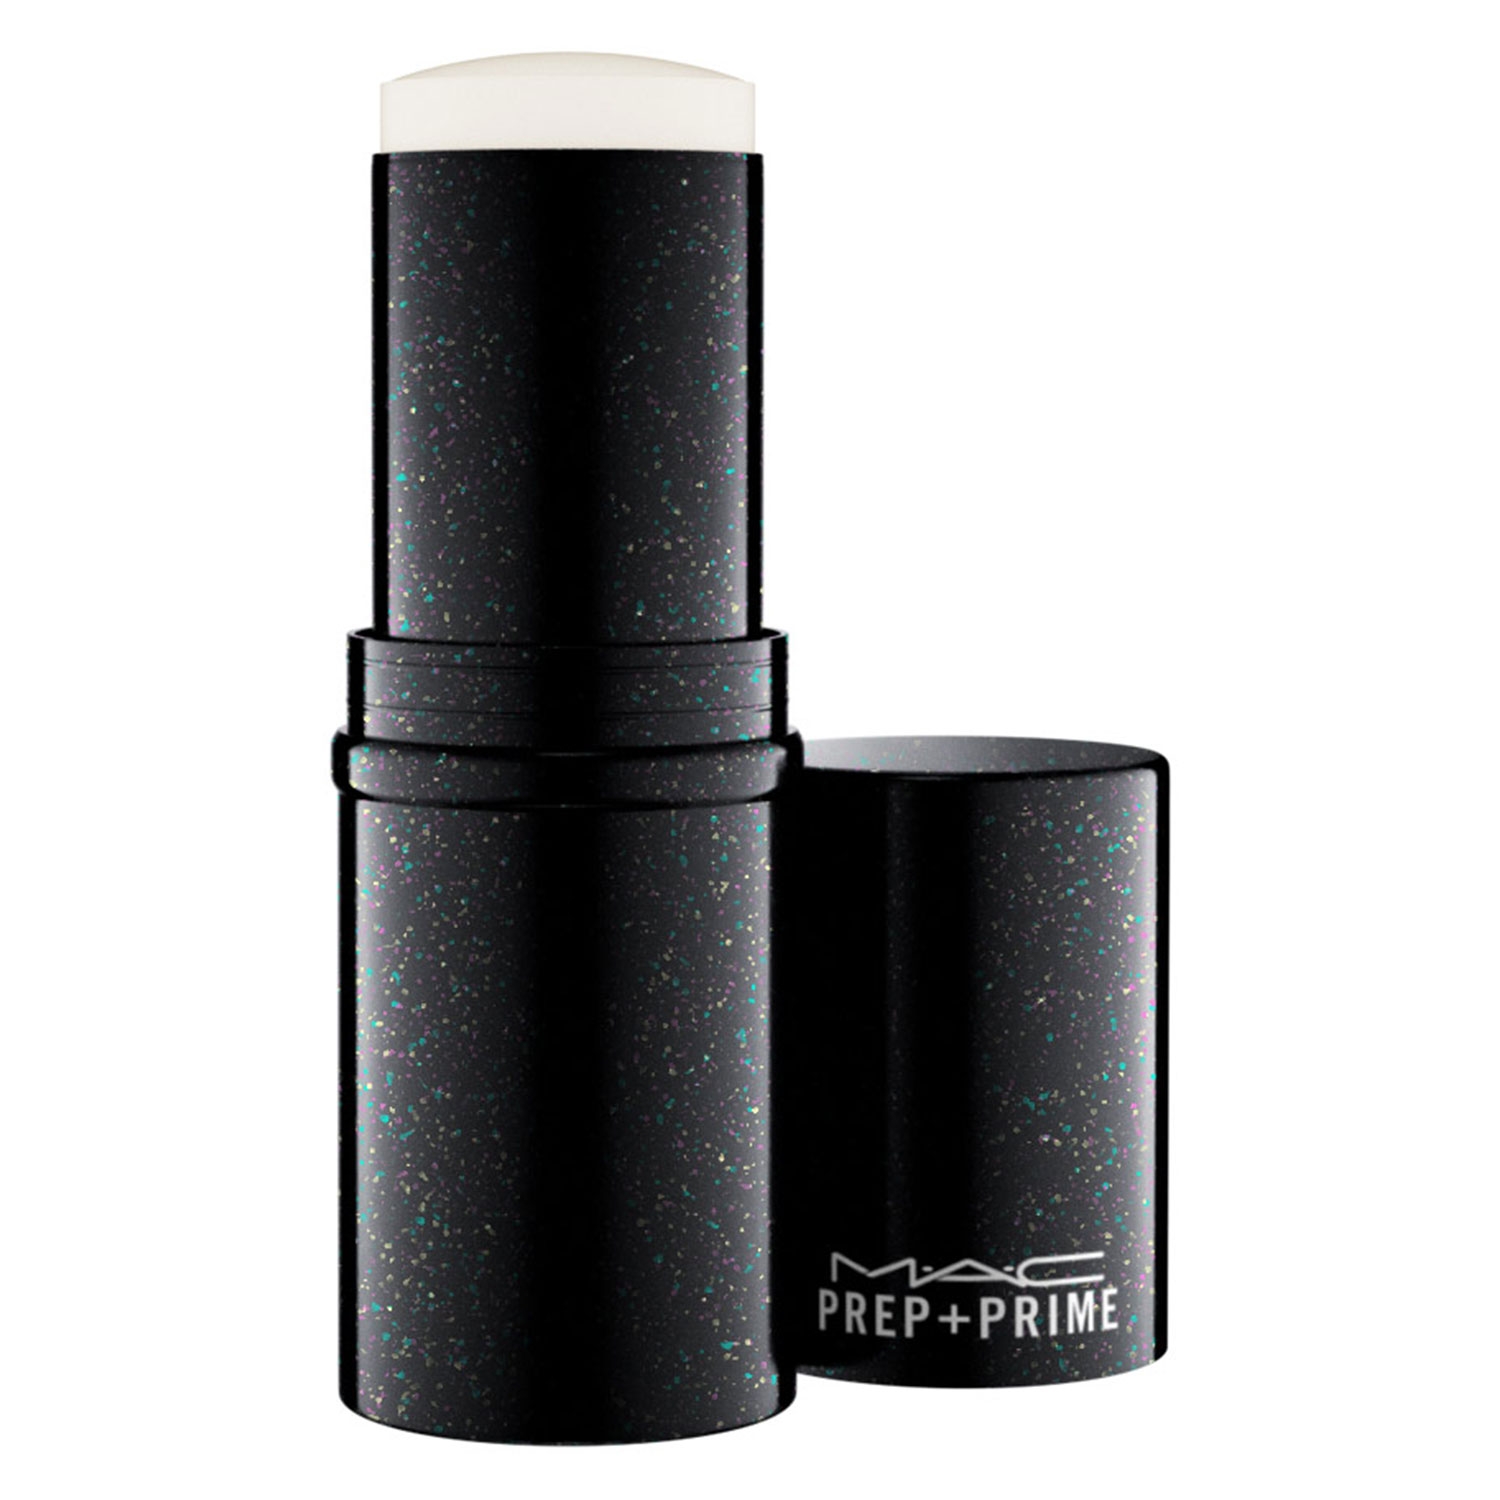 Produktbild von Prep+Prime - Pore Refiner Stick